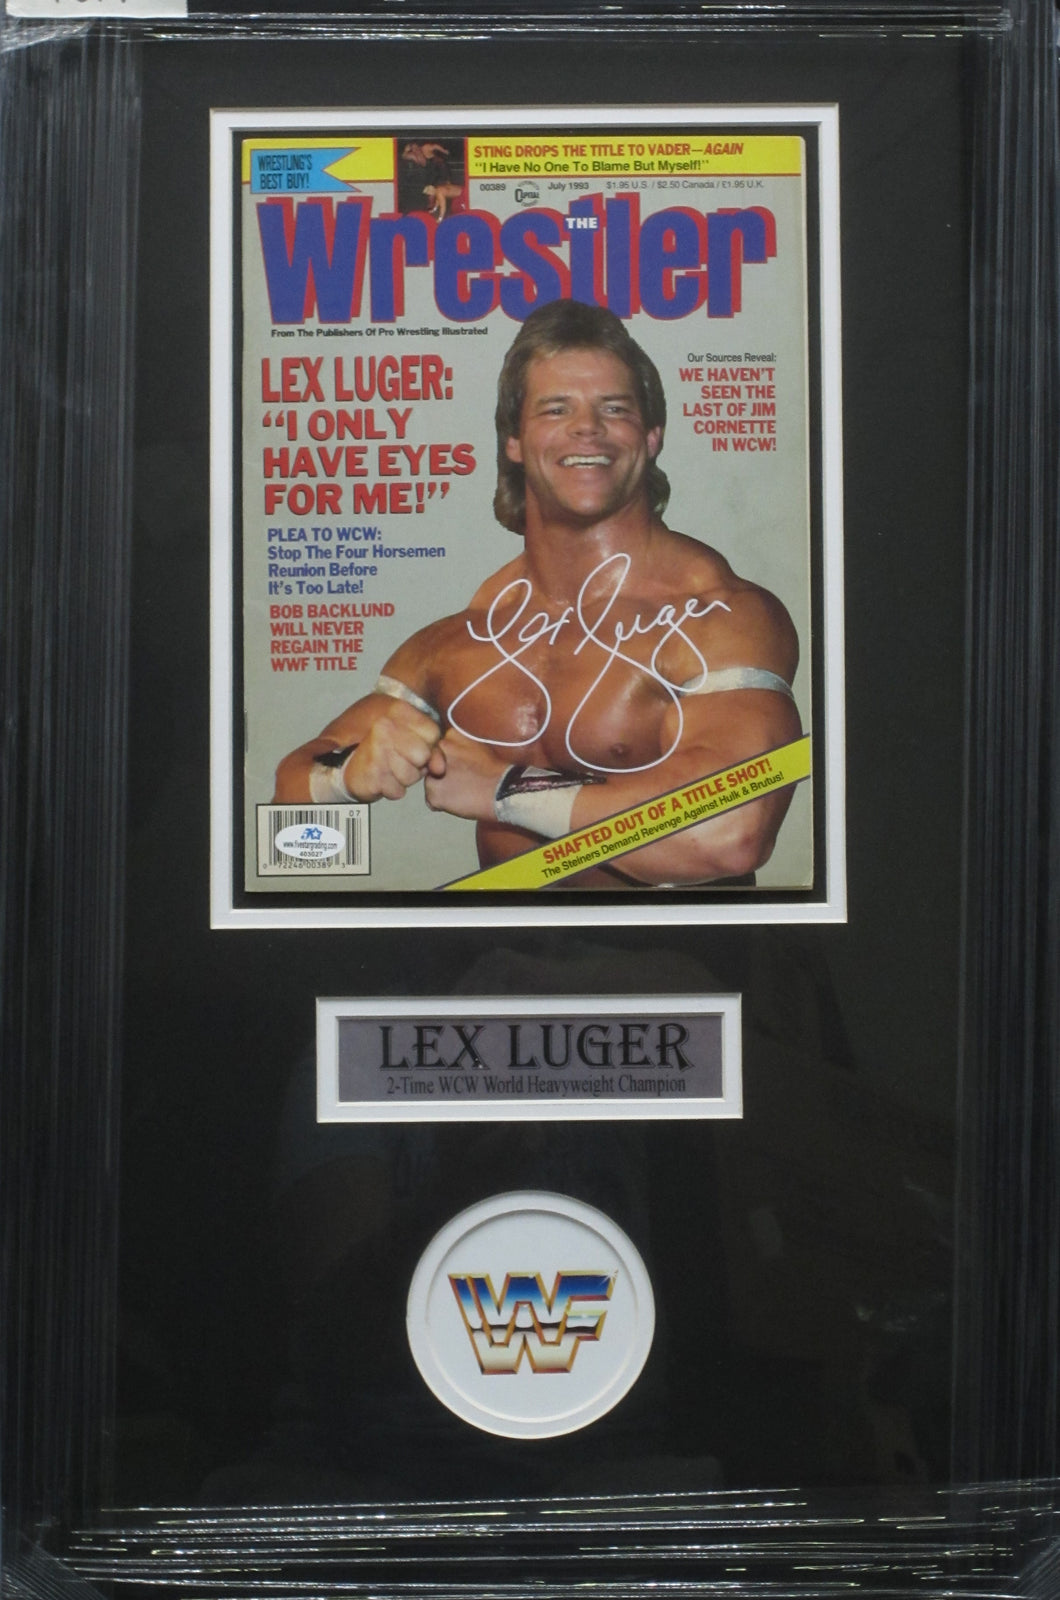 American Professional Wrestler Lex Luger Signed 1993 Wrestler Magazine Framed & Matted with COA